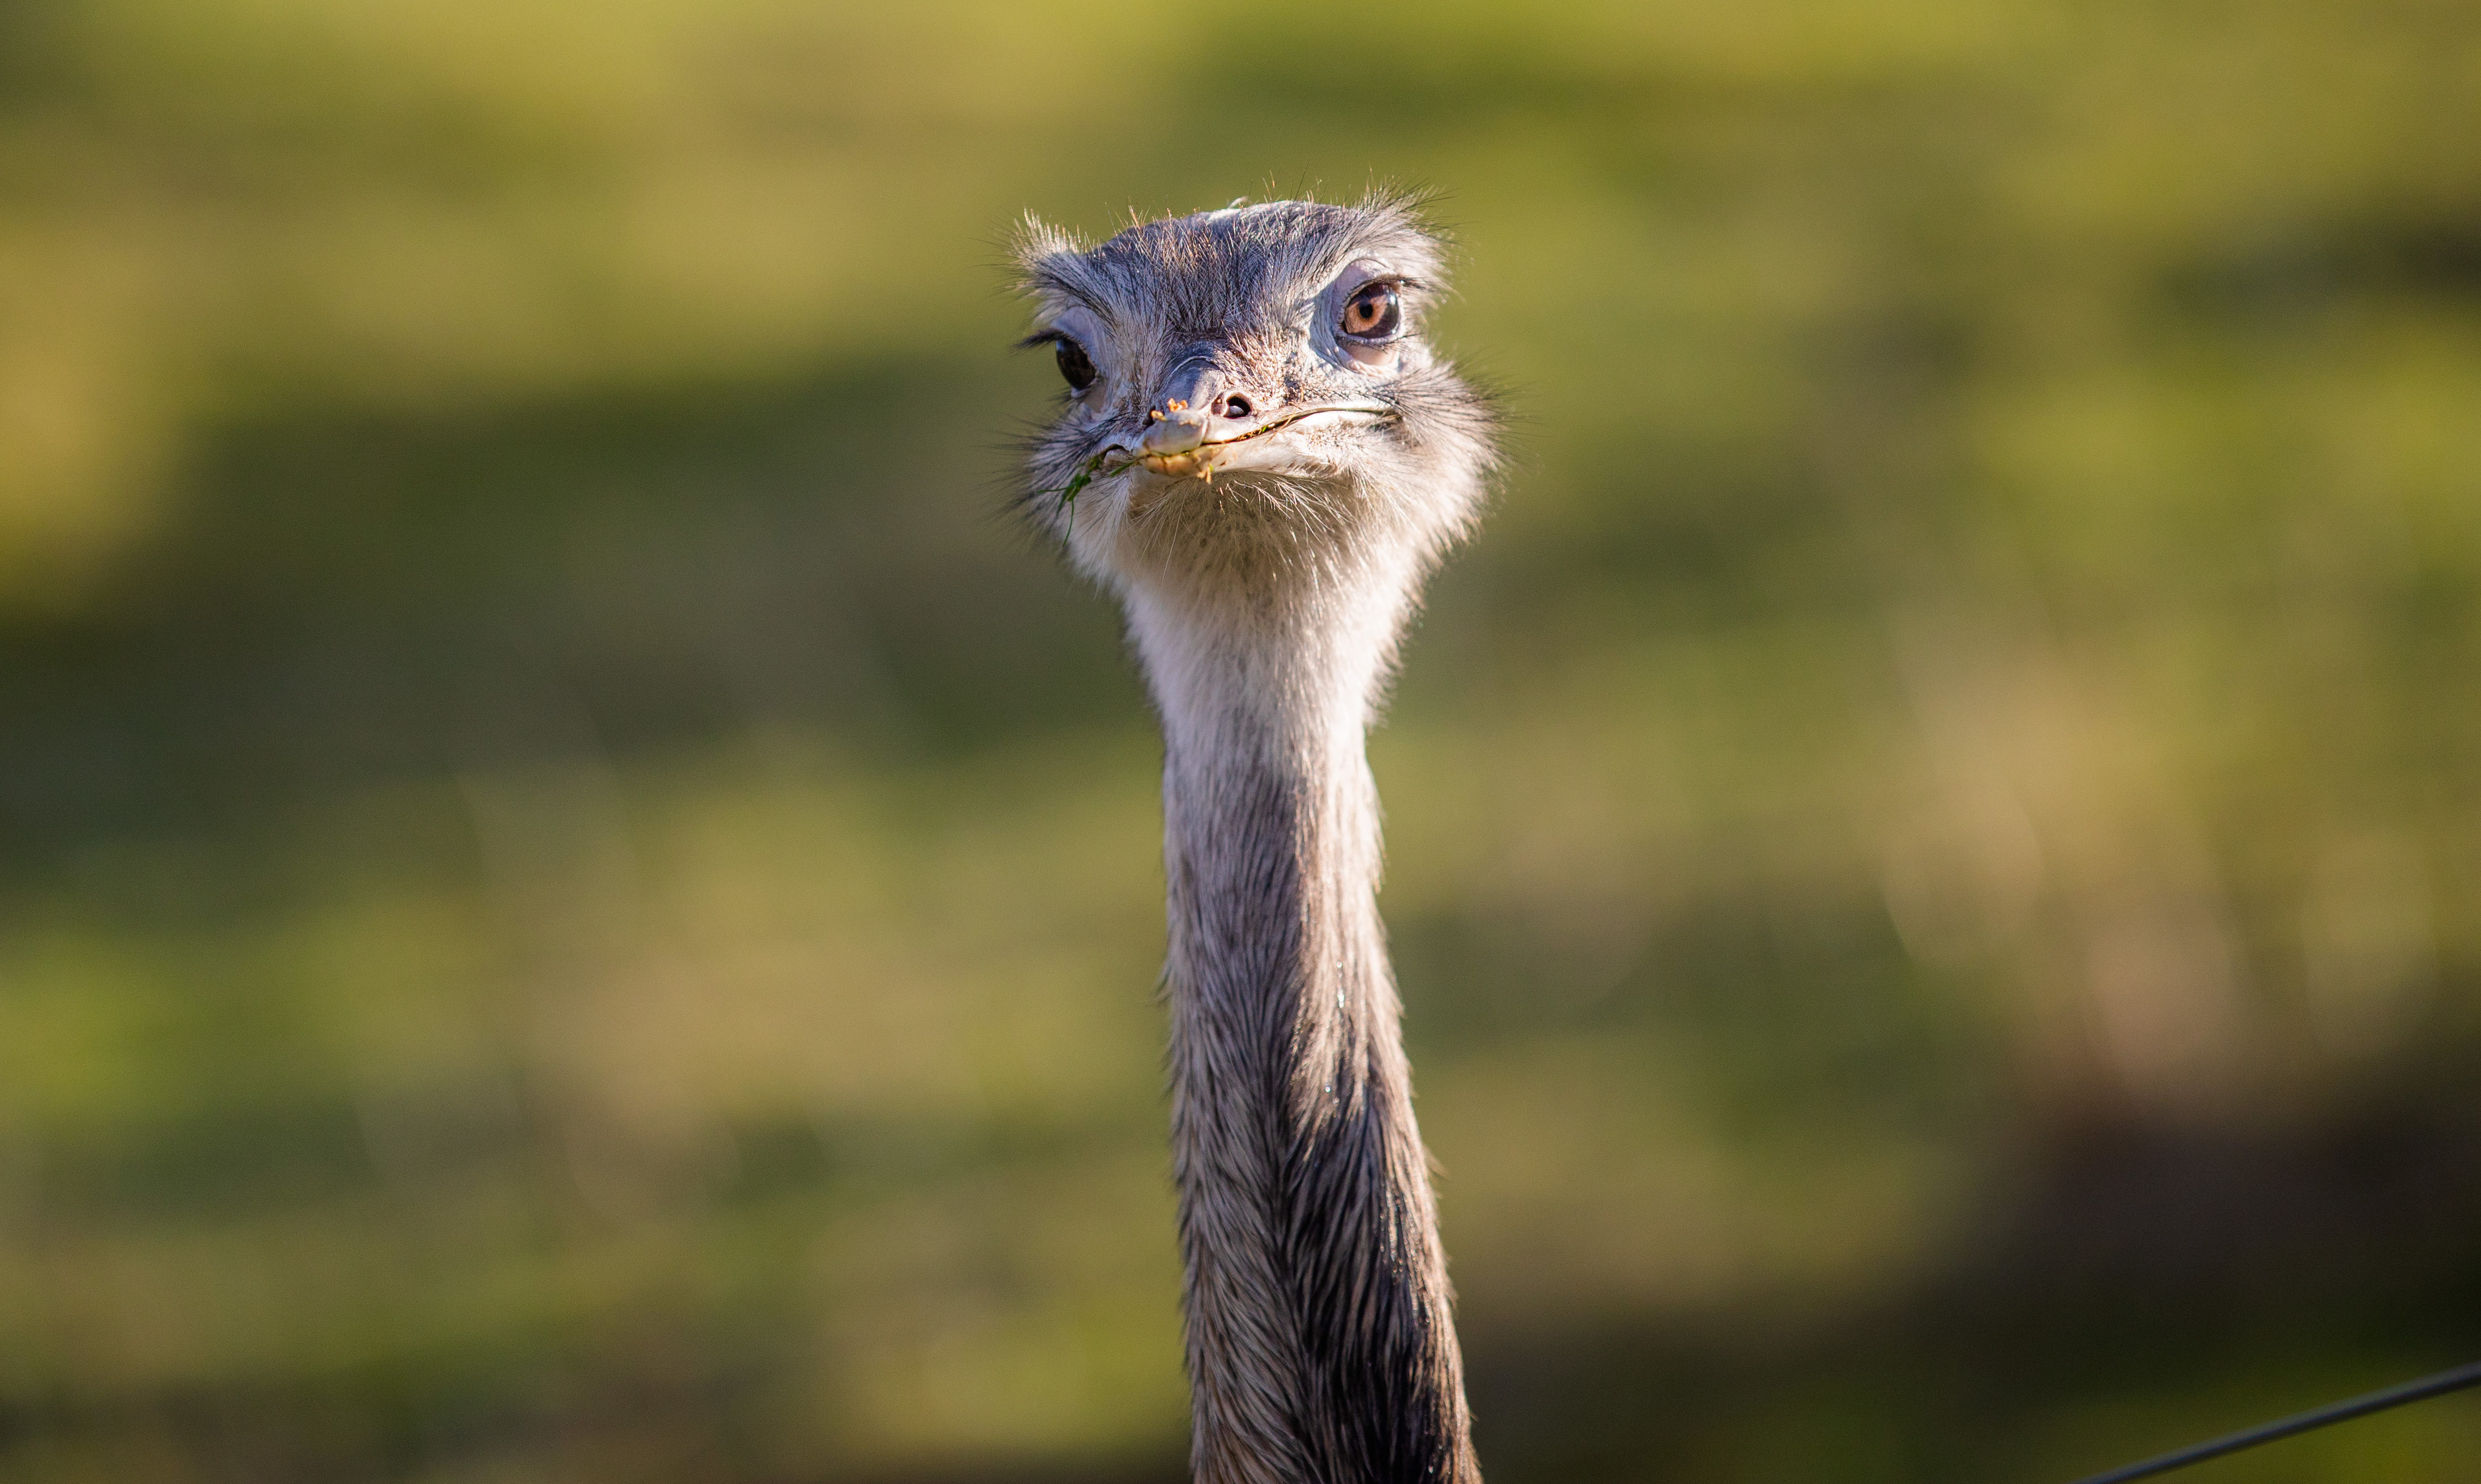 An ostrich at Auchingarrich Wildlife Park, by Comrie.